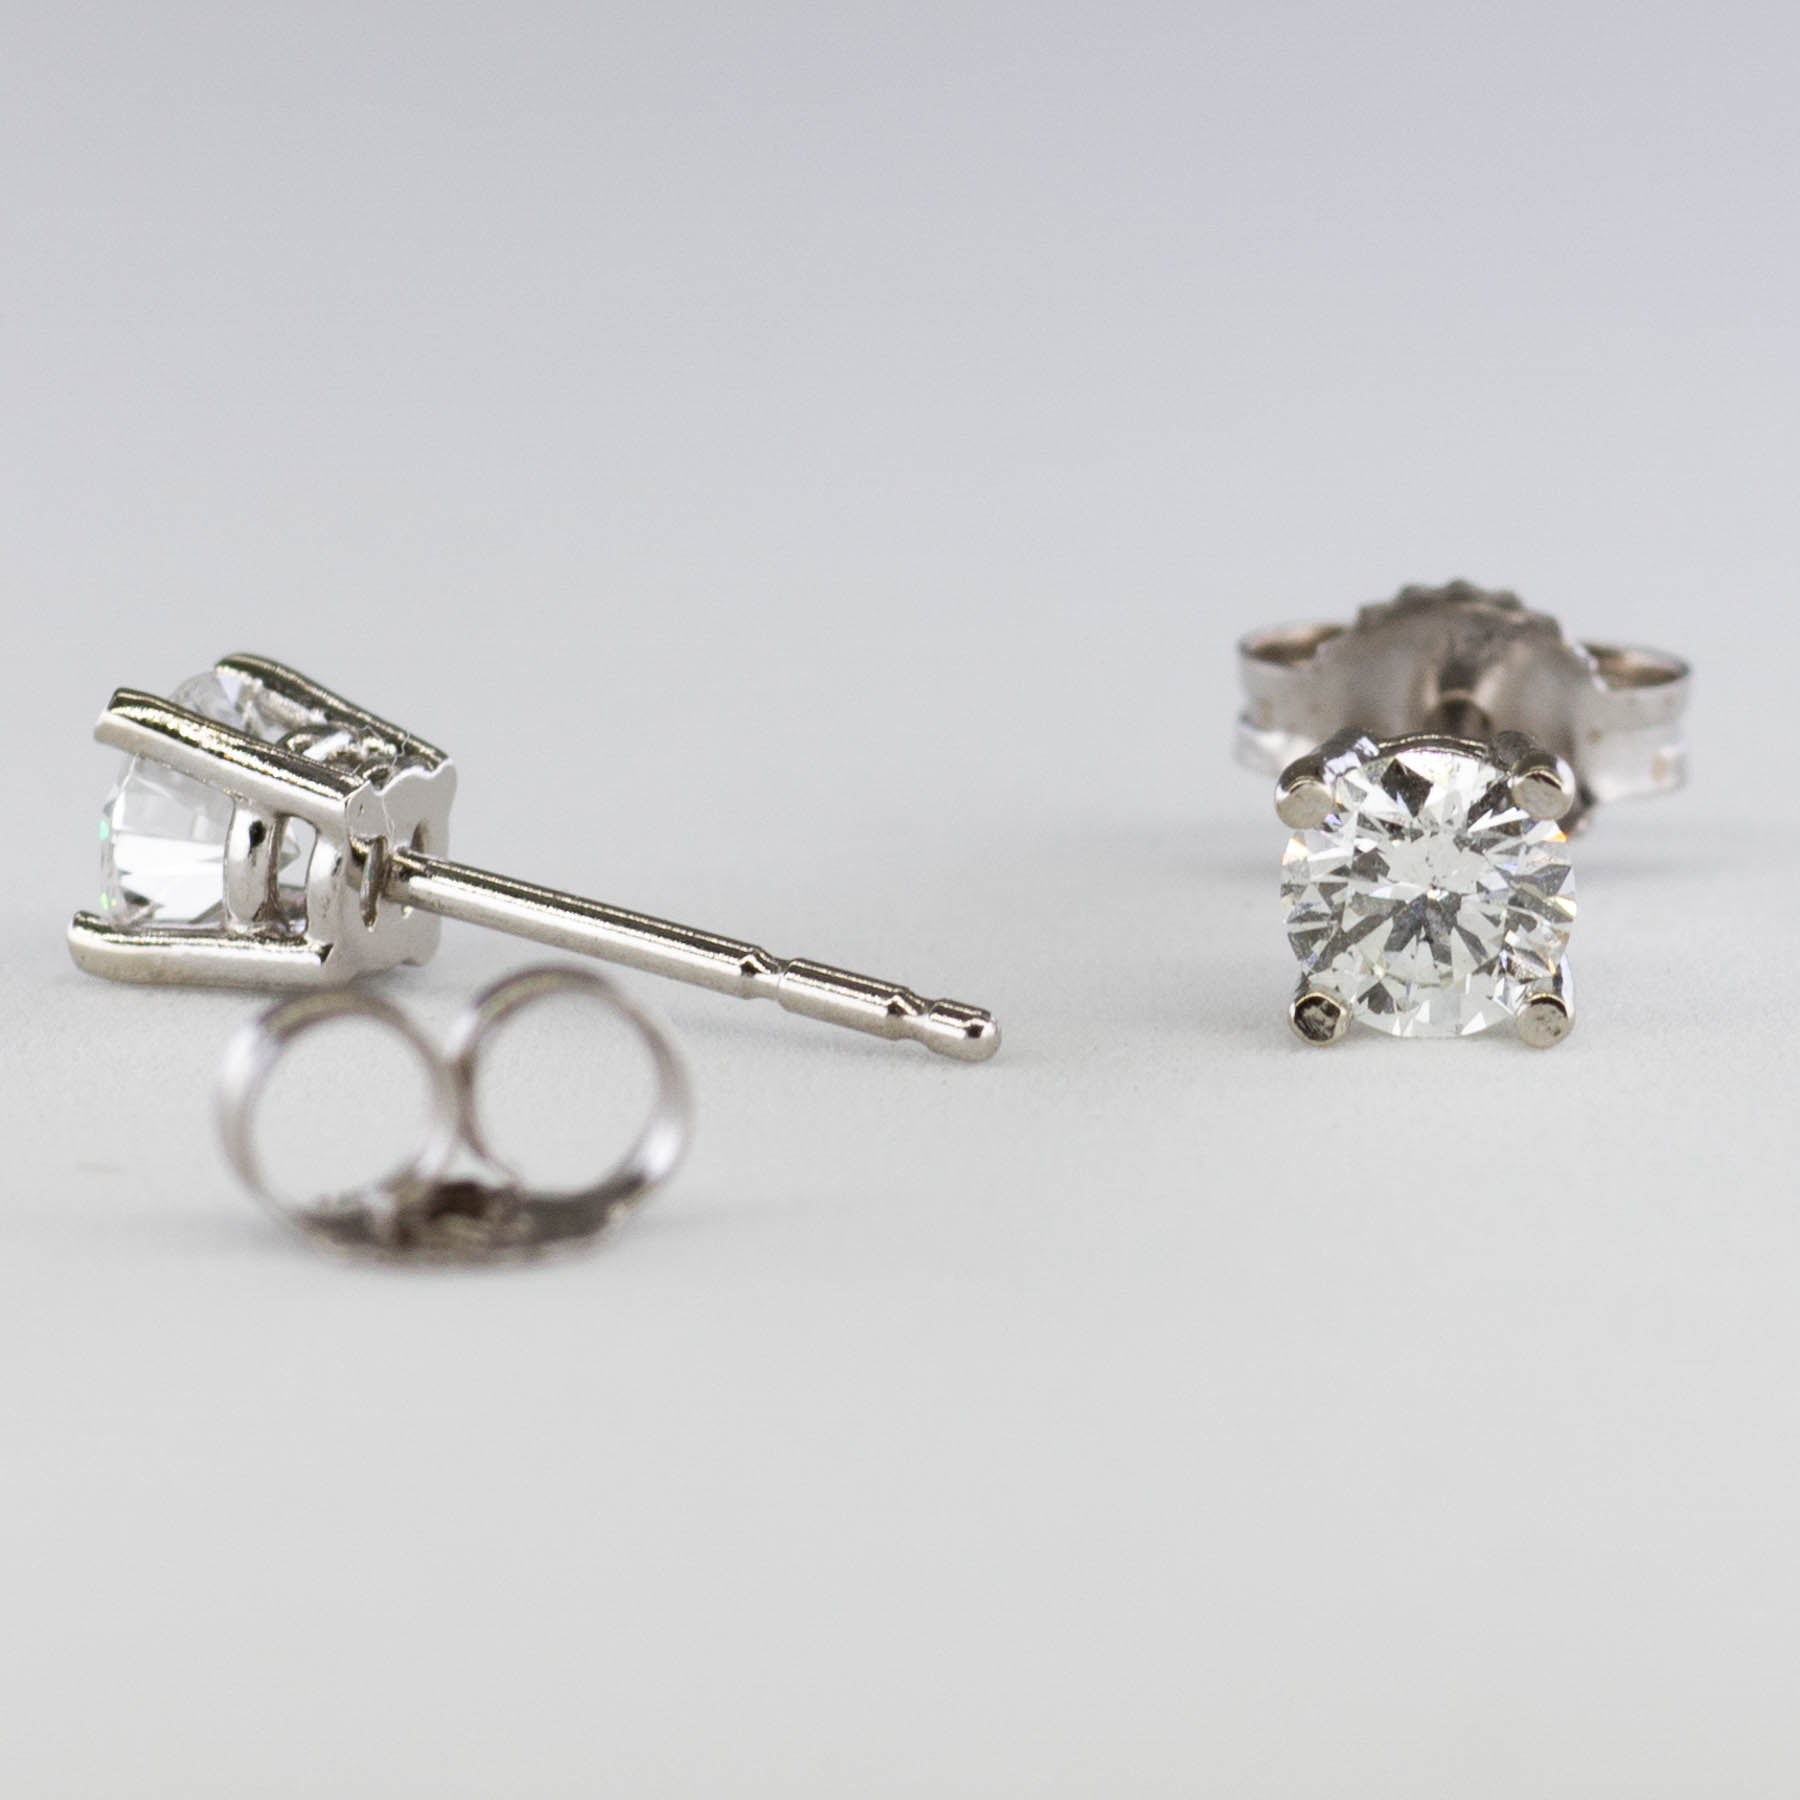 '100 Ways' White Gold Diamond Studs | 1/2 carat |